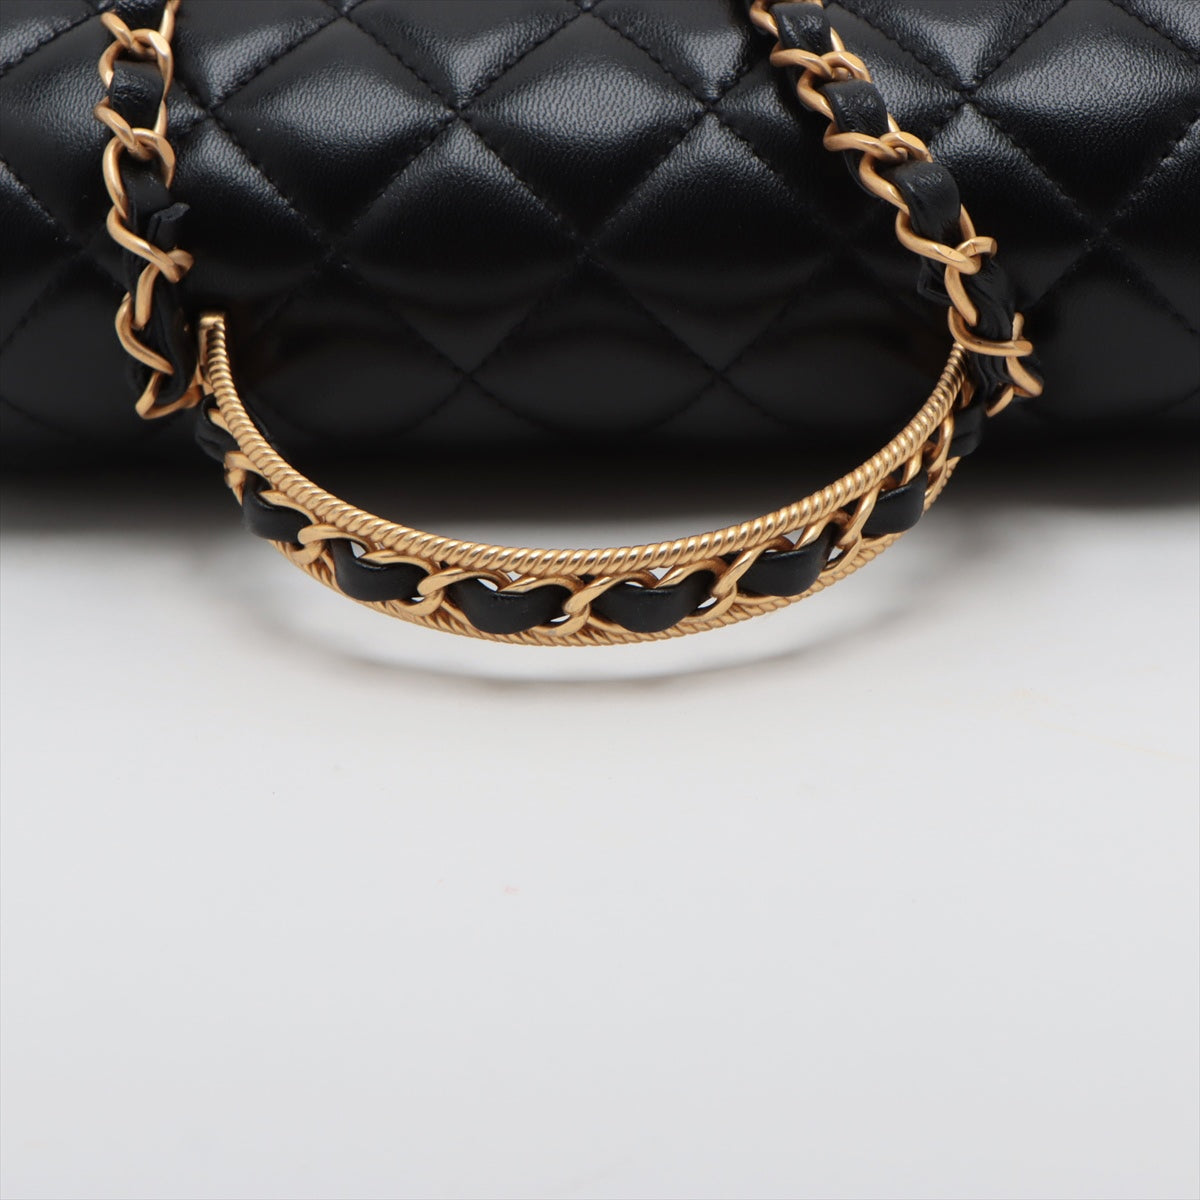 Chanel Matelasse Lambskin 2way shoulder bag Top handle Black Gold Metal fittings